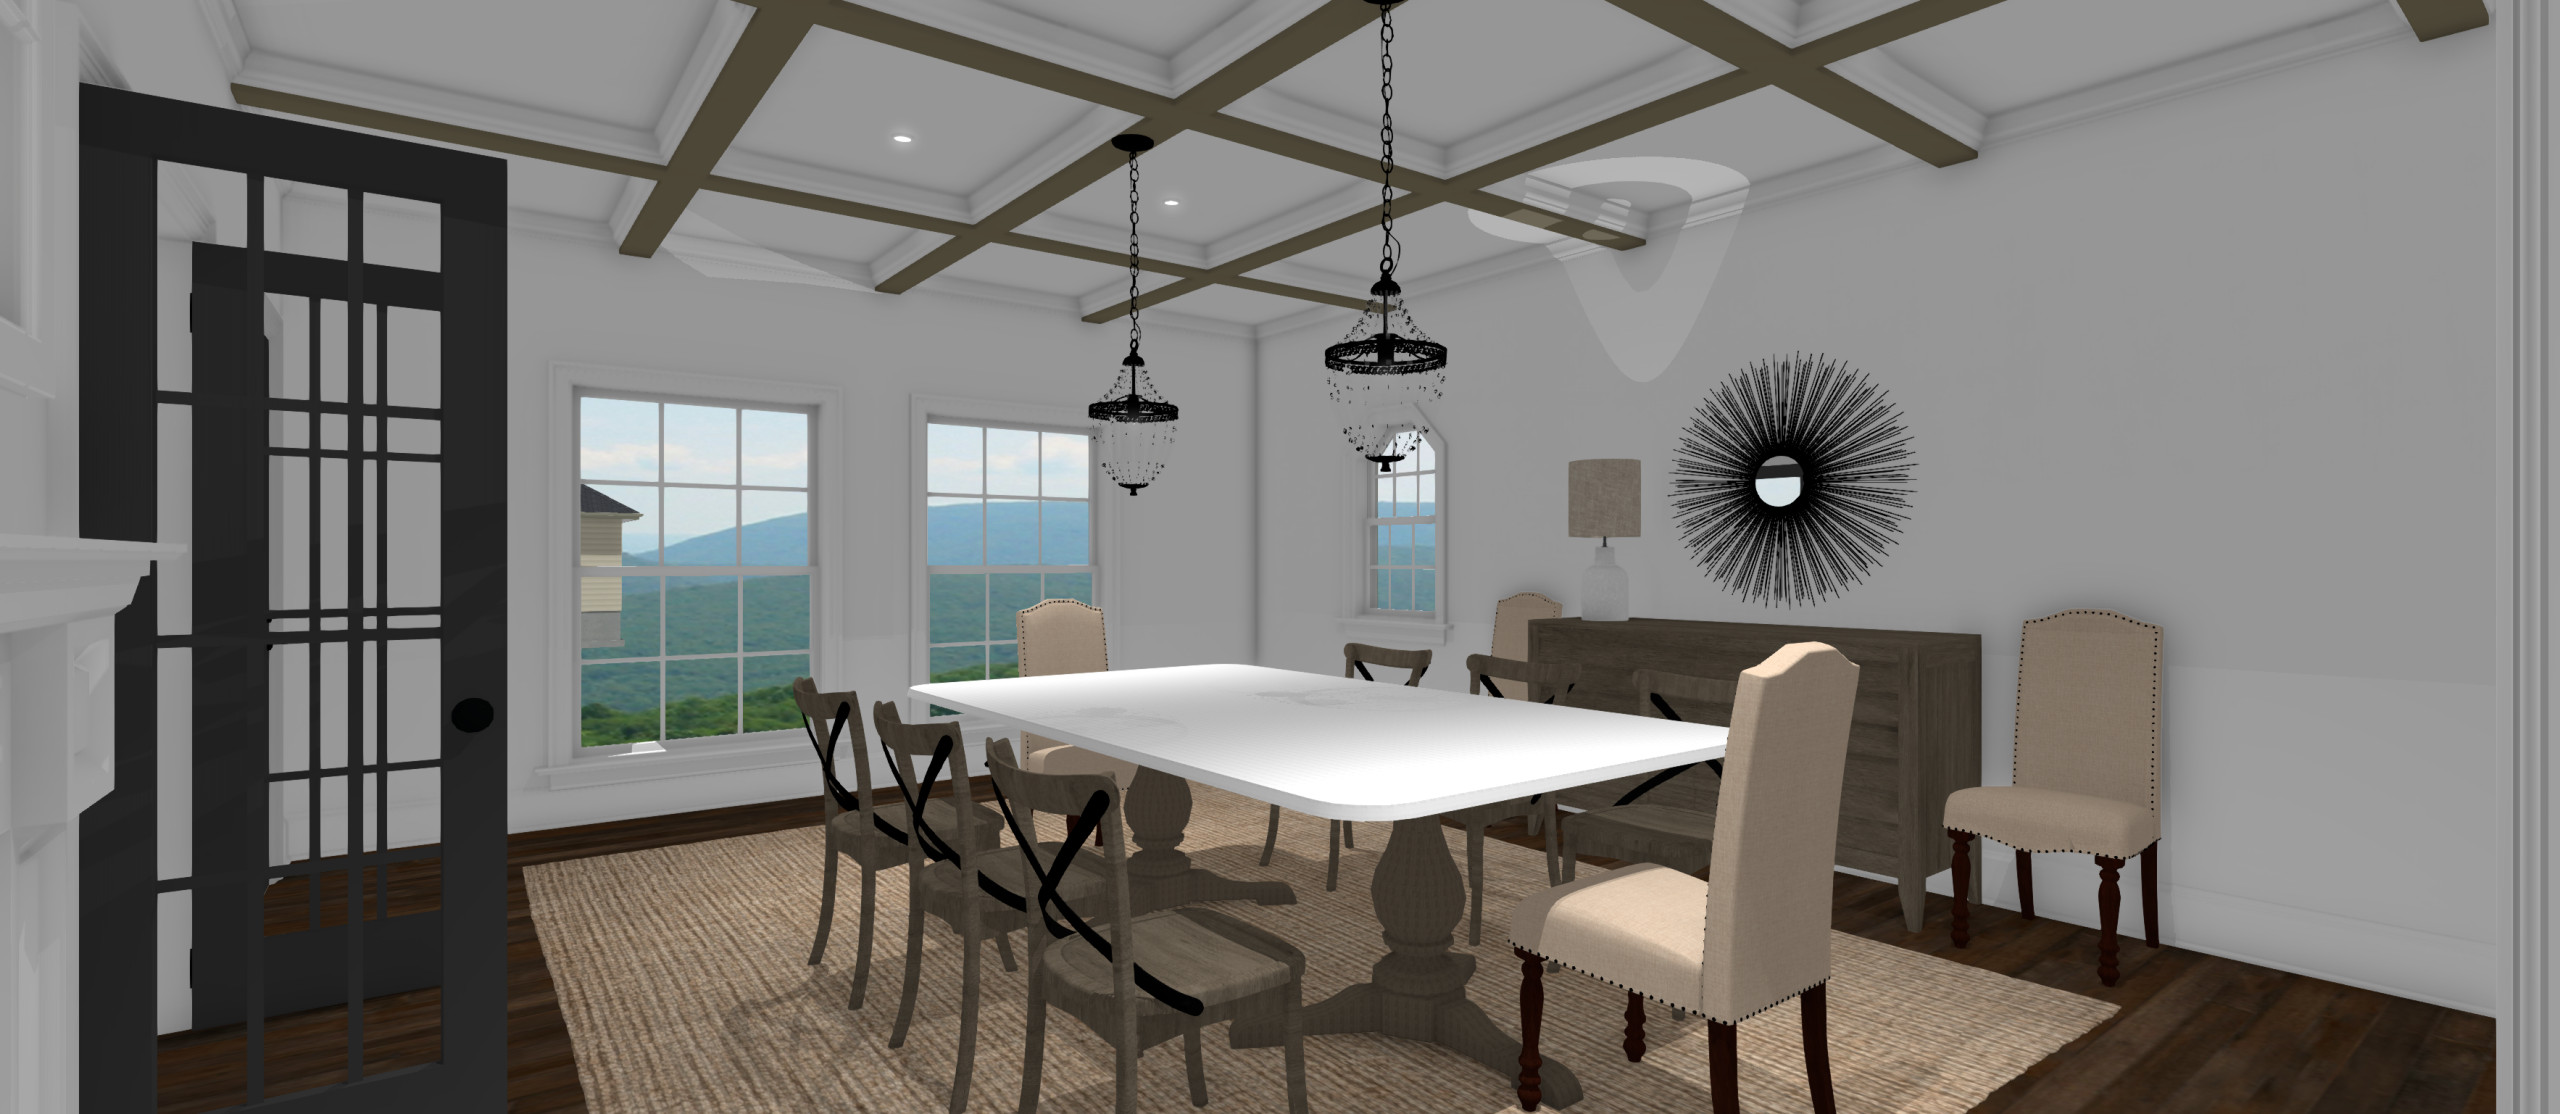 Conceptual Dining Room Design